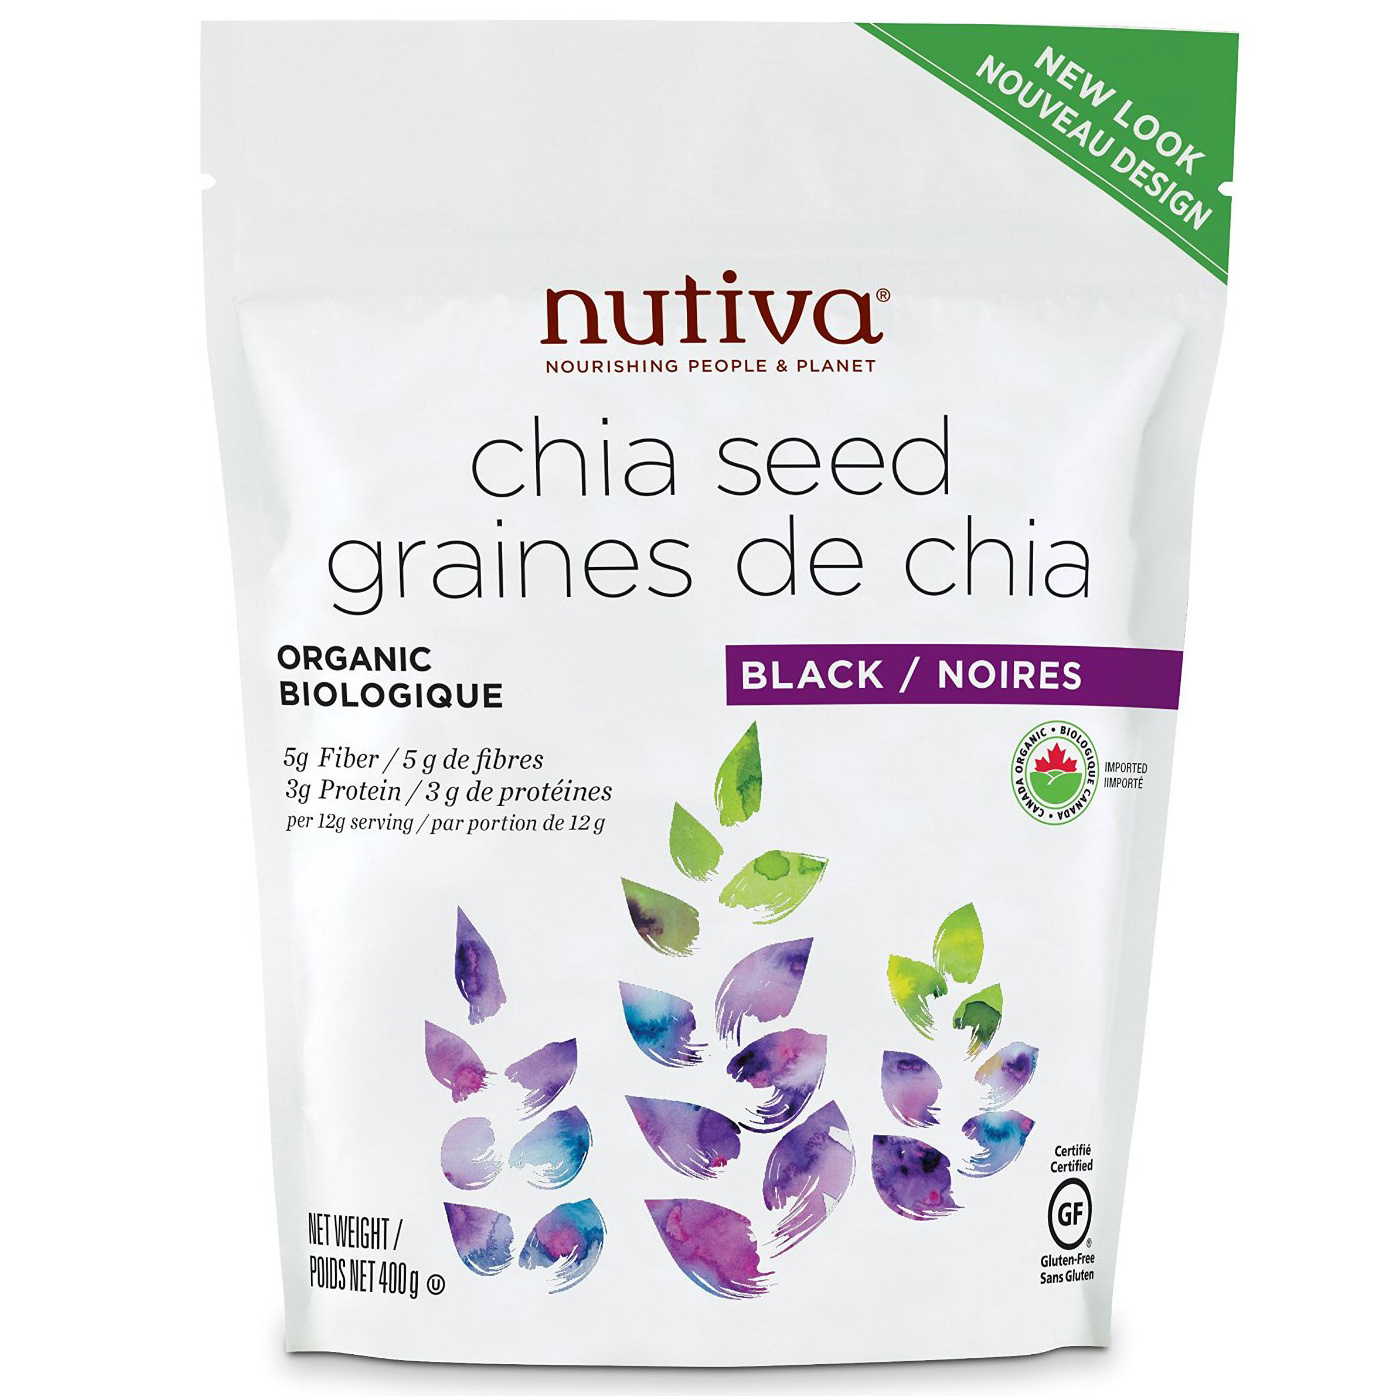 Buy Nutiva Organic Black Chia Seeds Online Canada ...